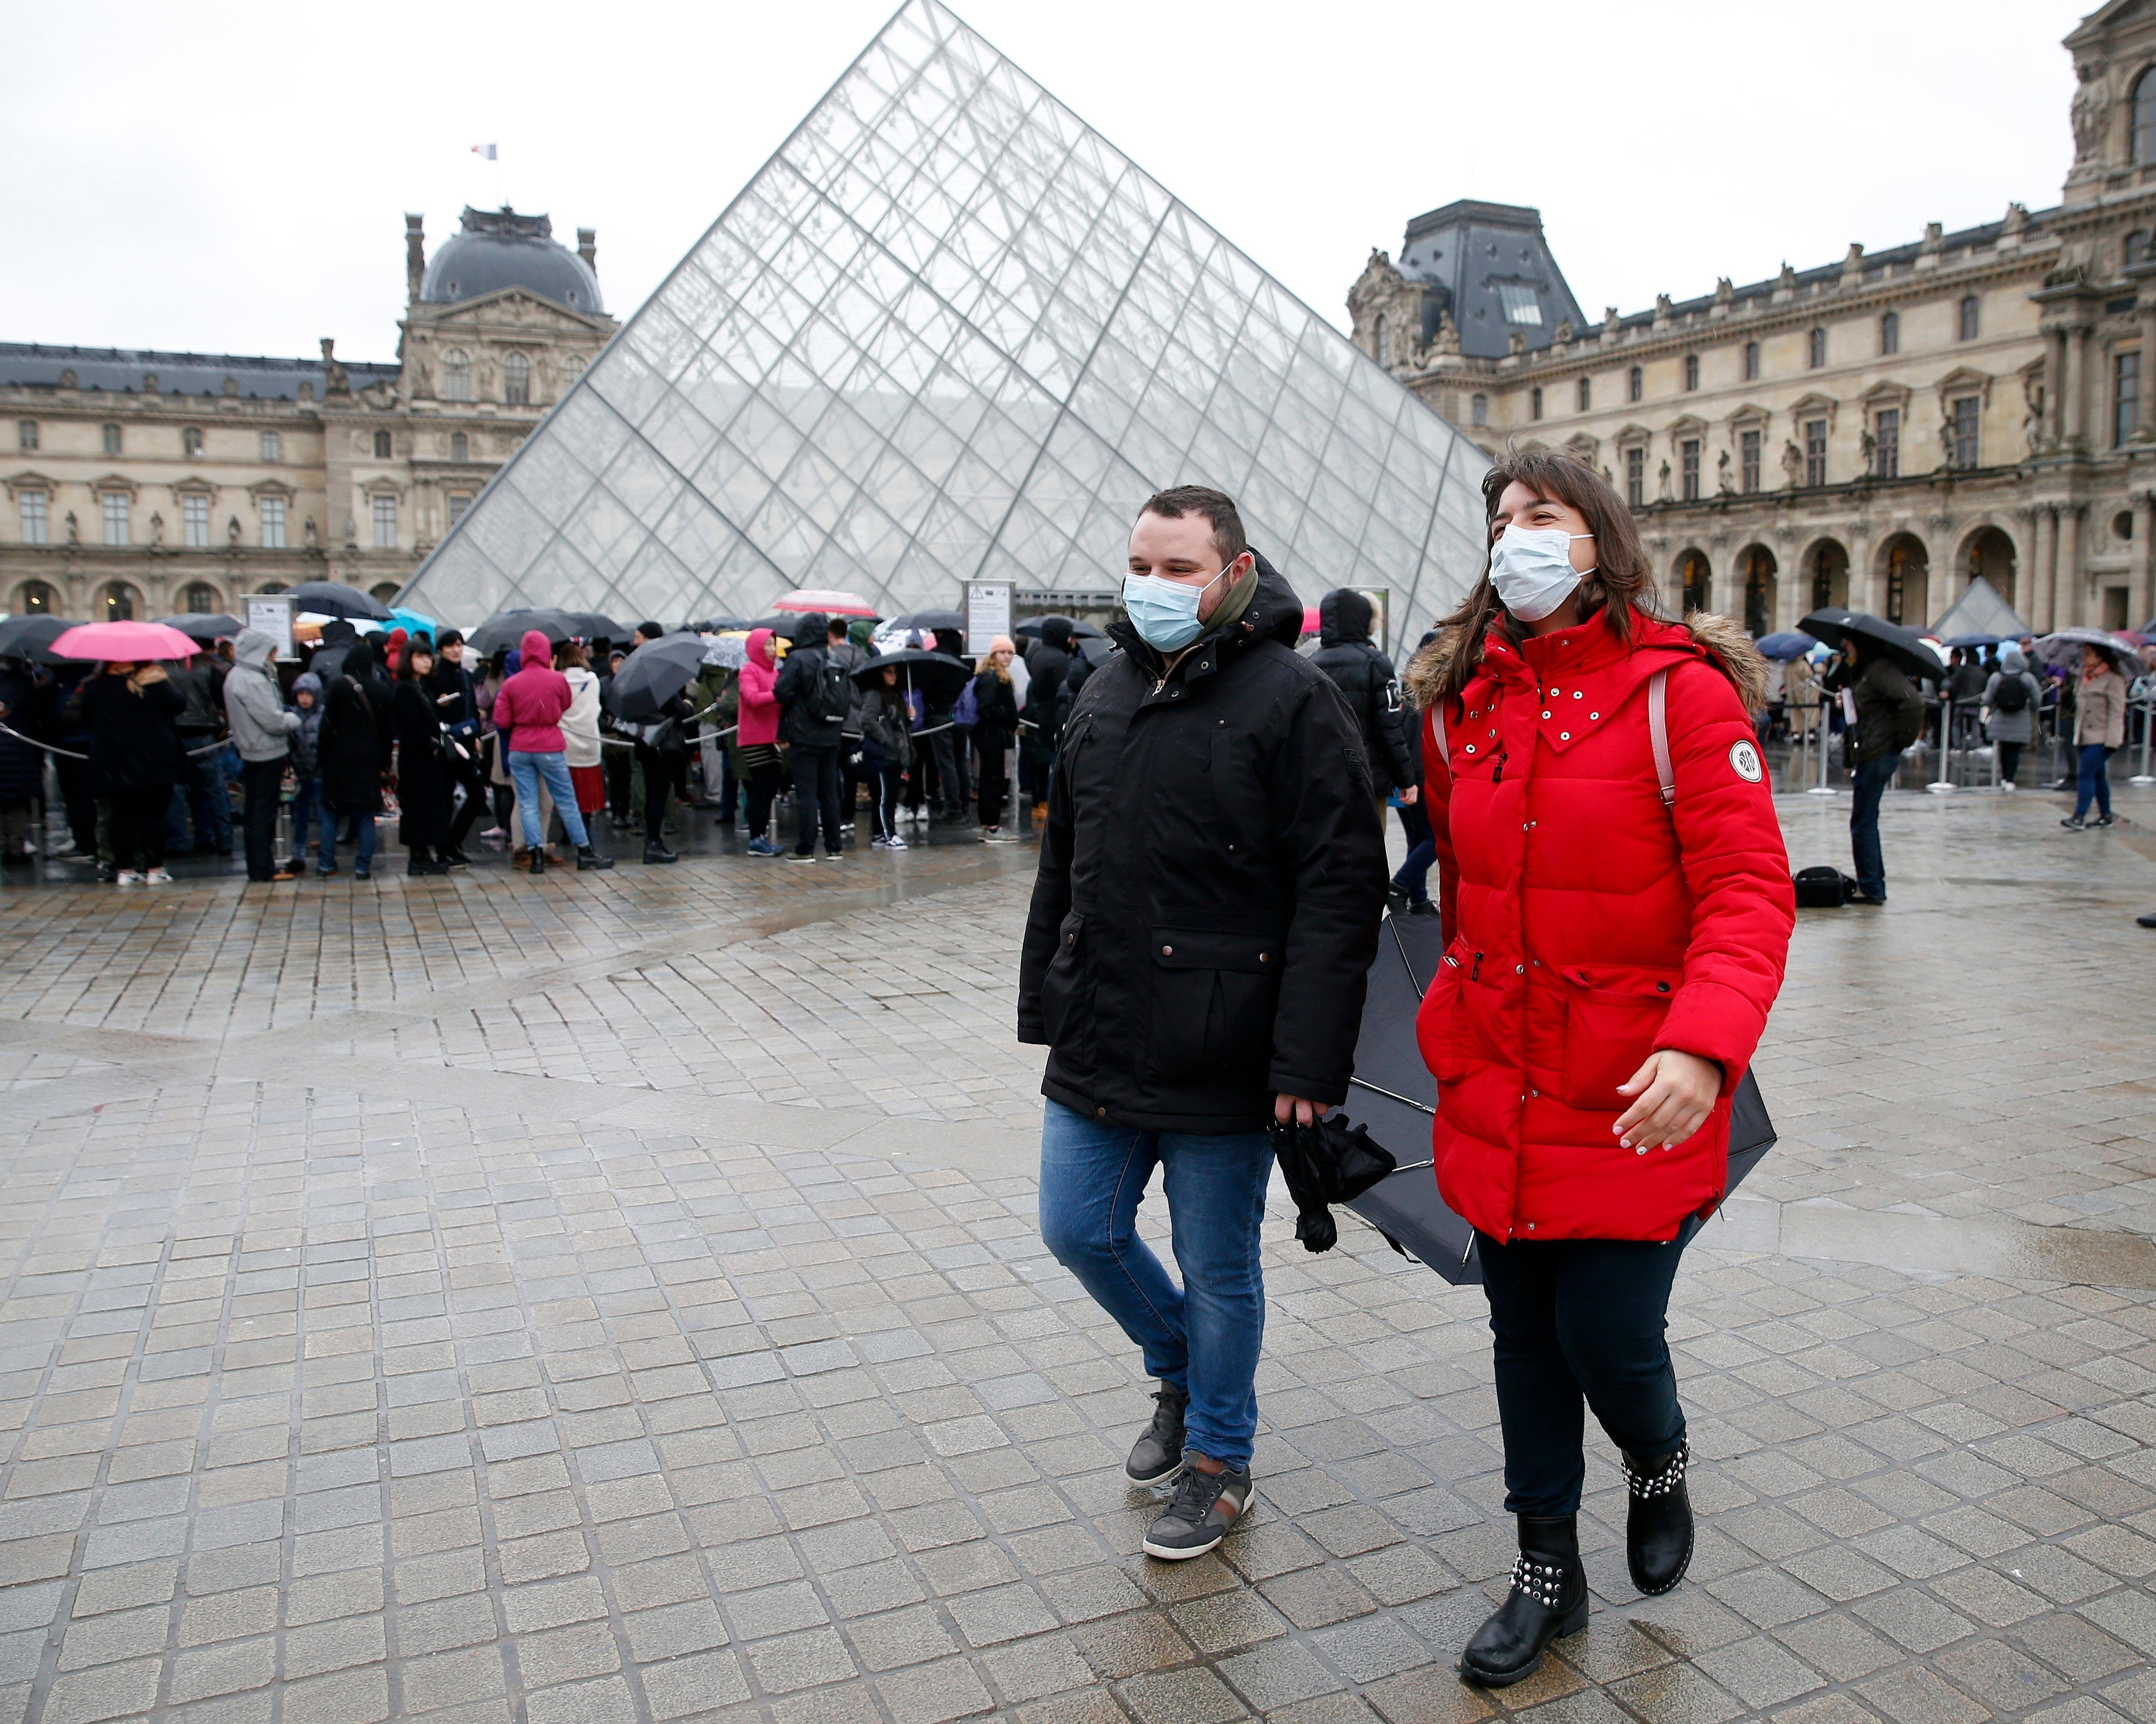 Tourists still flock to The Louvre amidst Coronavirus outbreak.